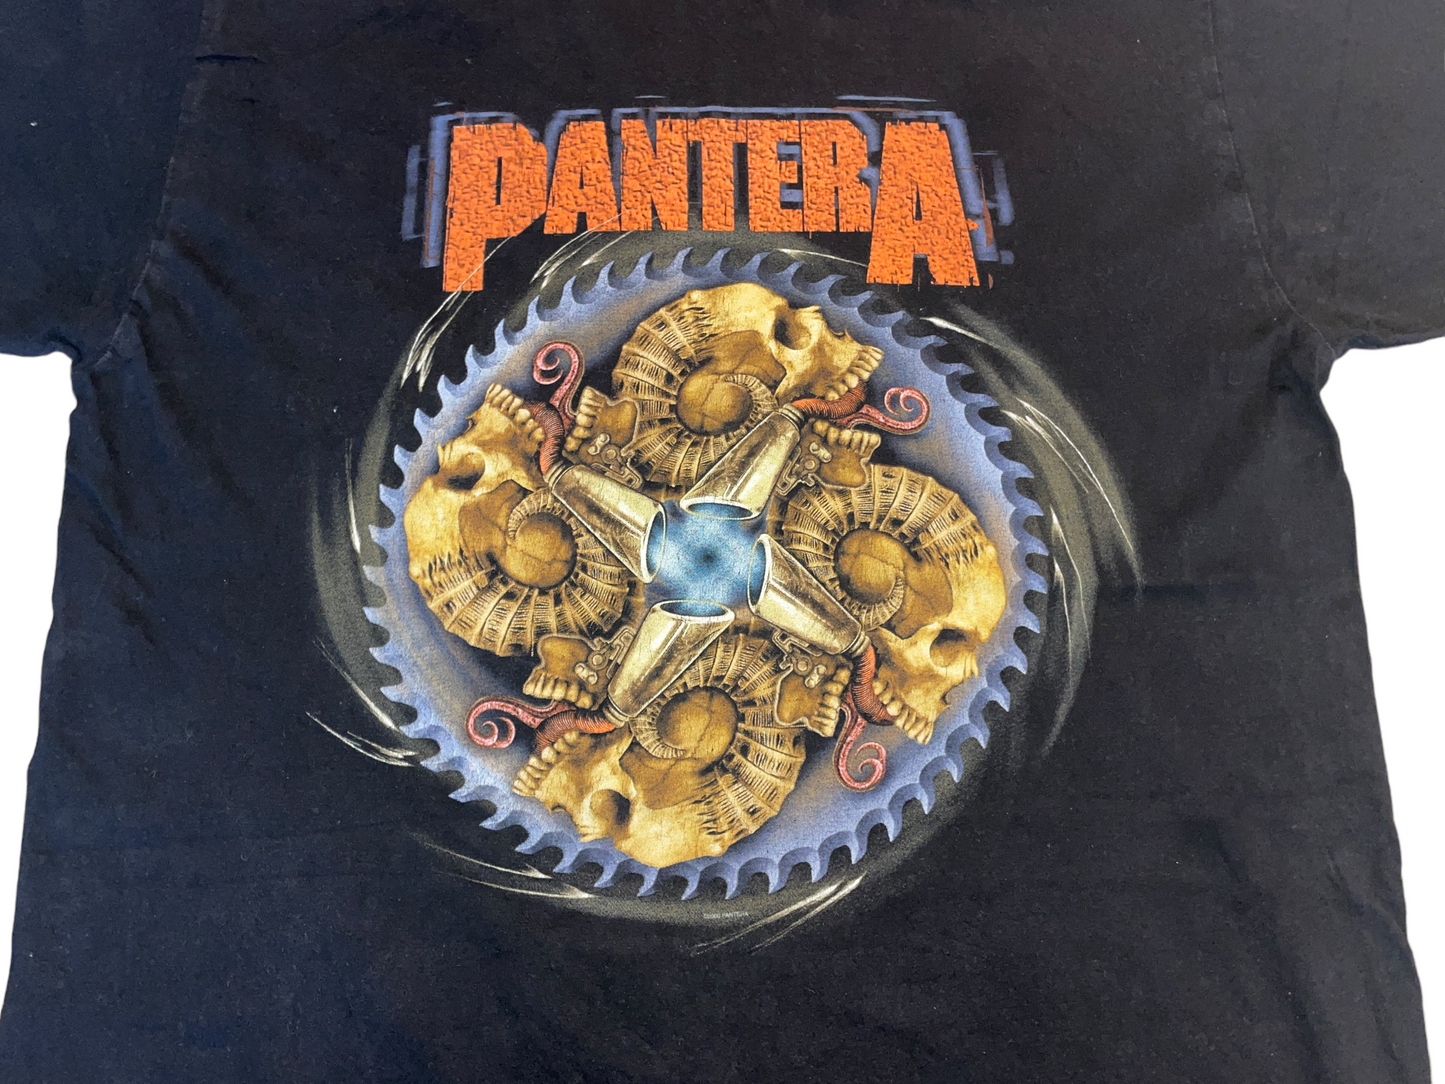 VIntage 2000 Pantera Tour T-Shirt